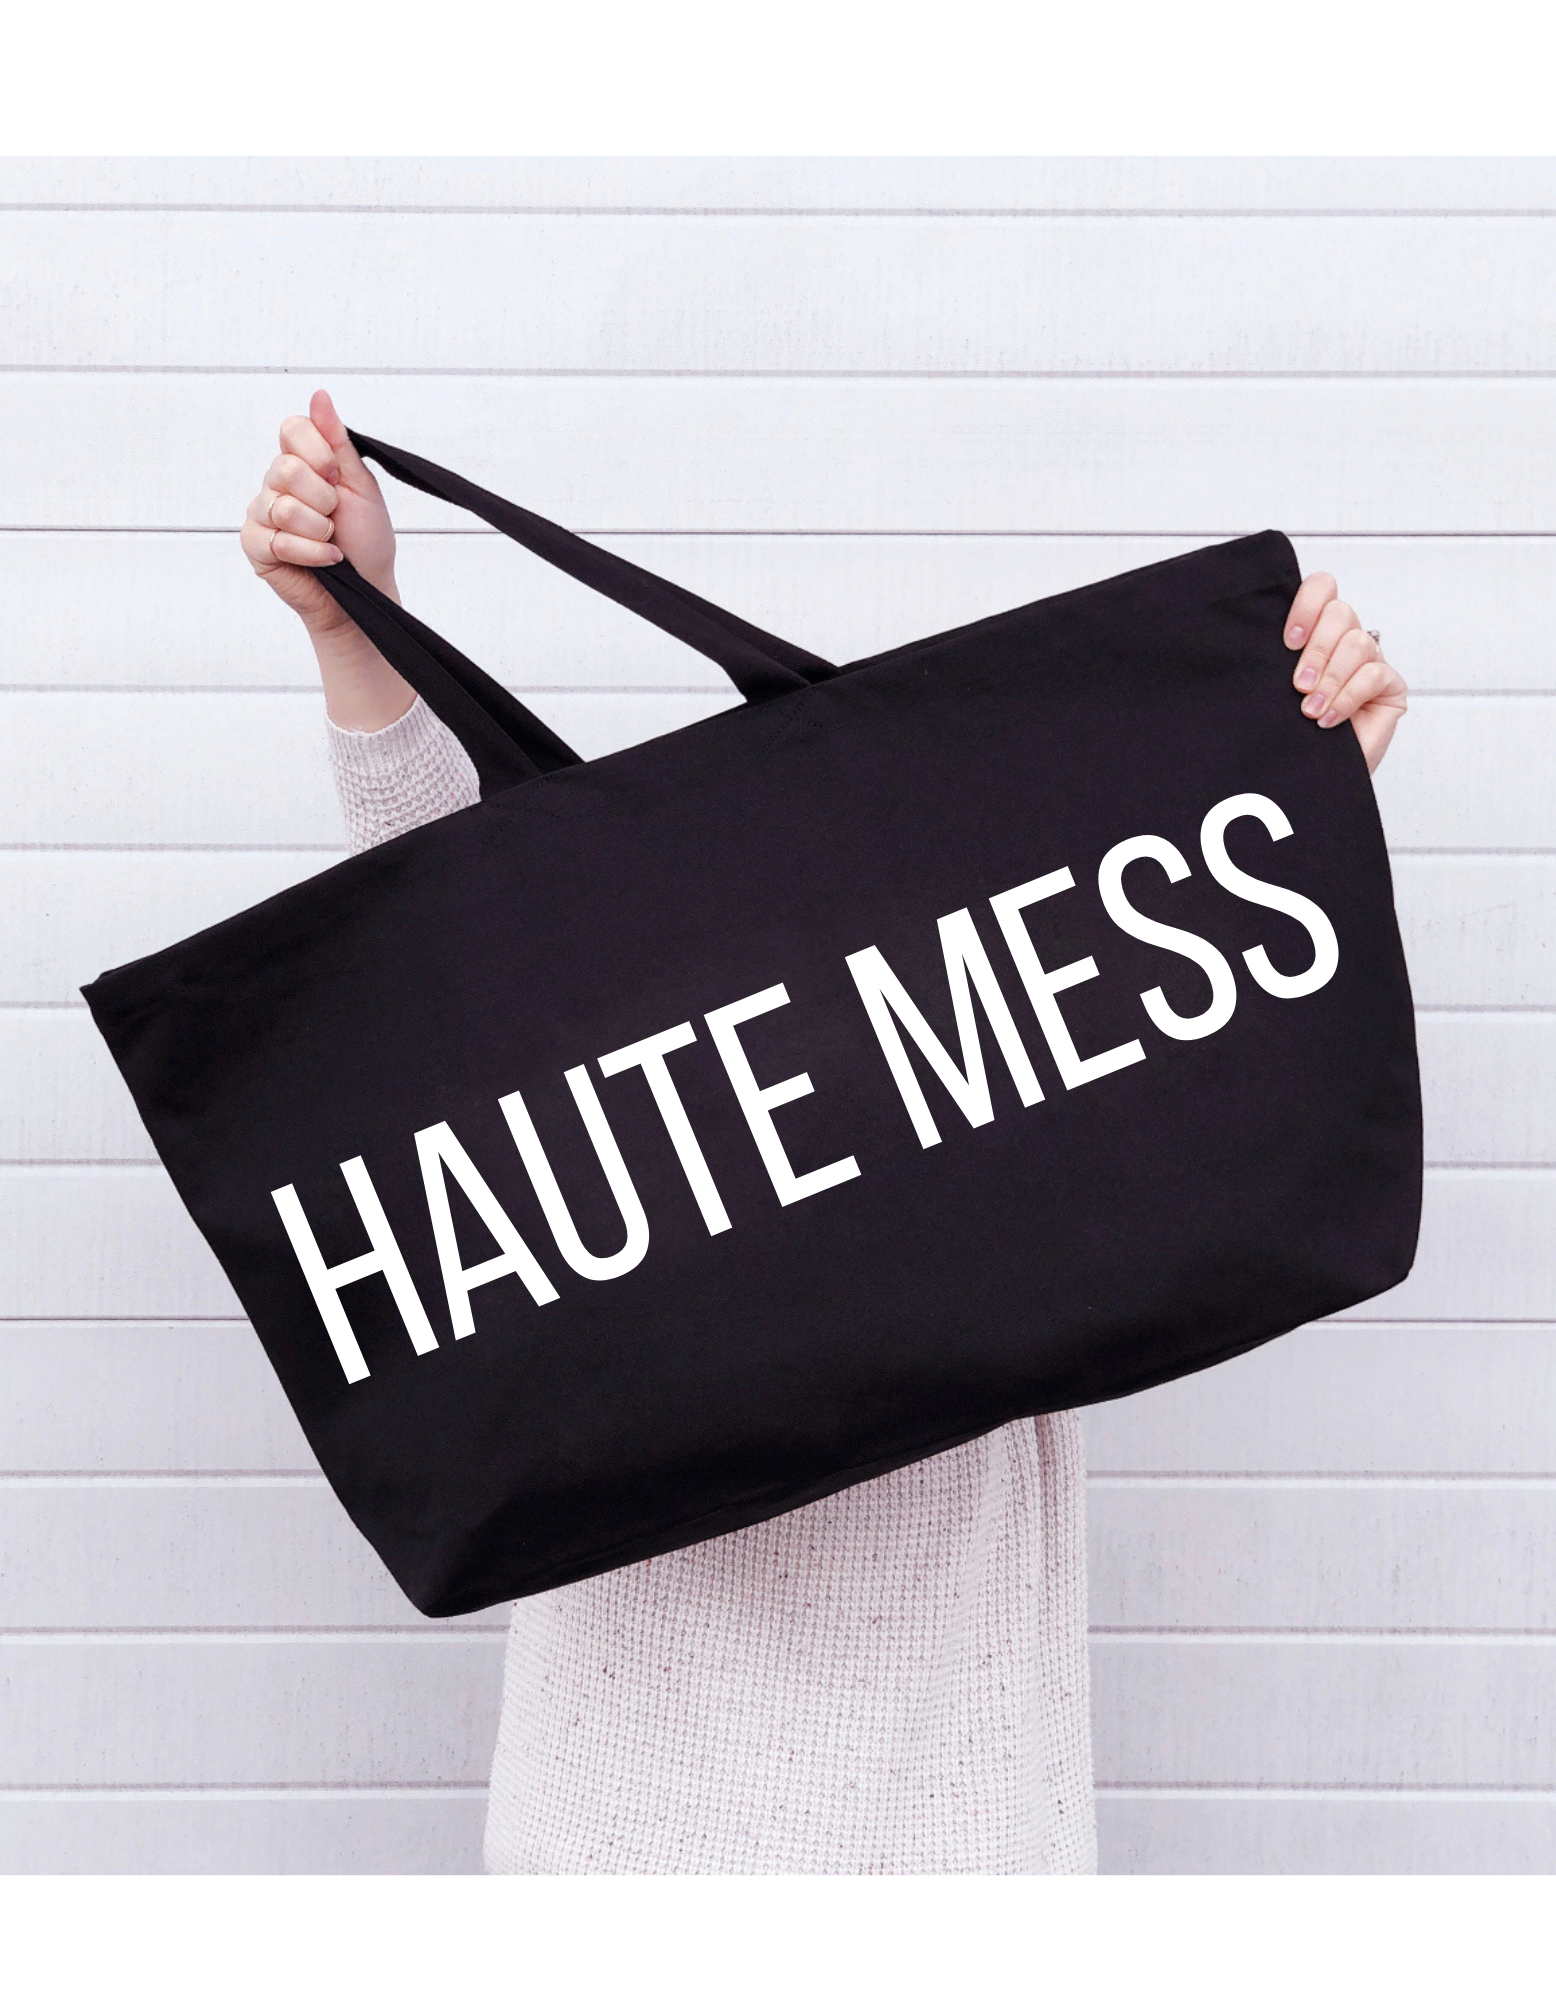 Haute Mess Oversized Canvas Weekender Bag - Yoga Bitch